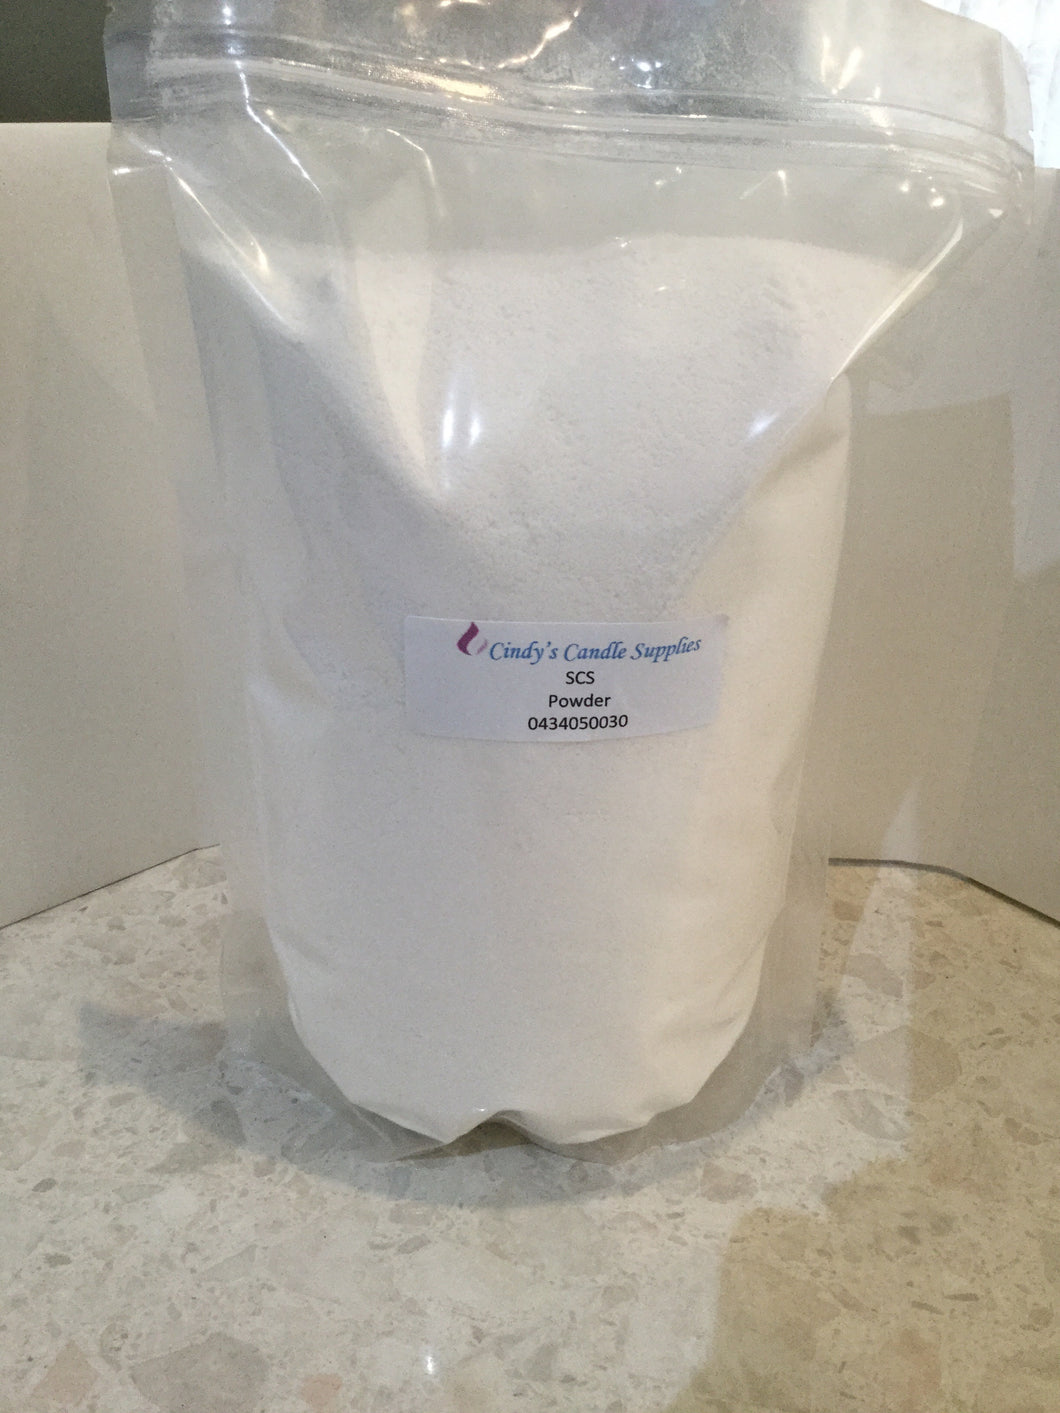 Sodium coco sulphate powder (SCS powder) 1 kilogram